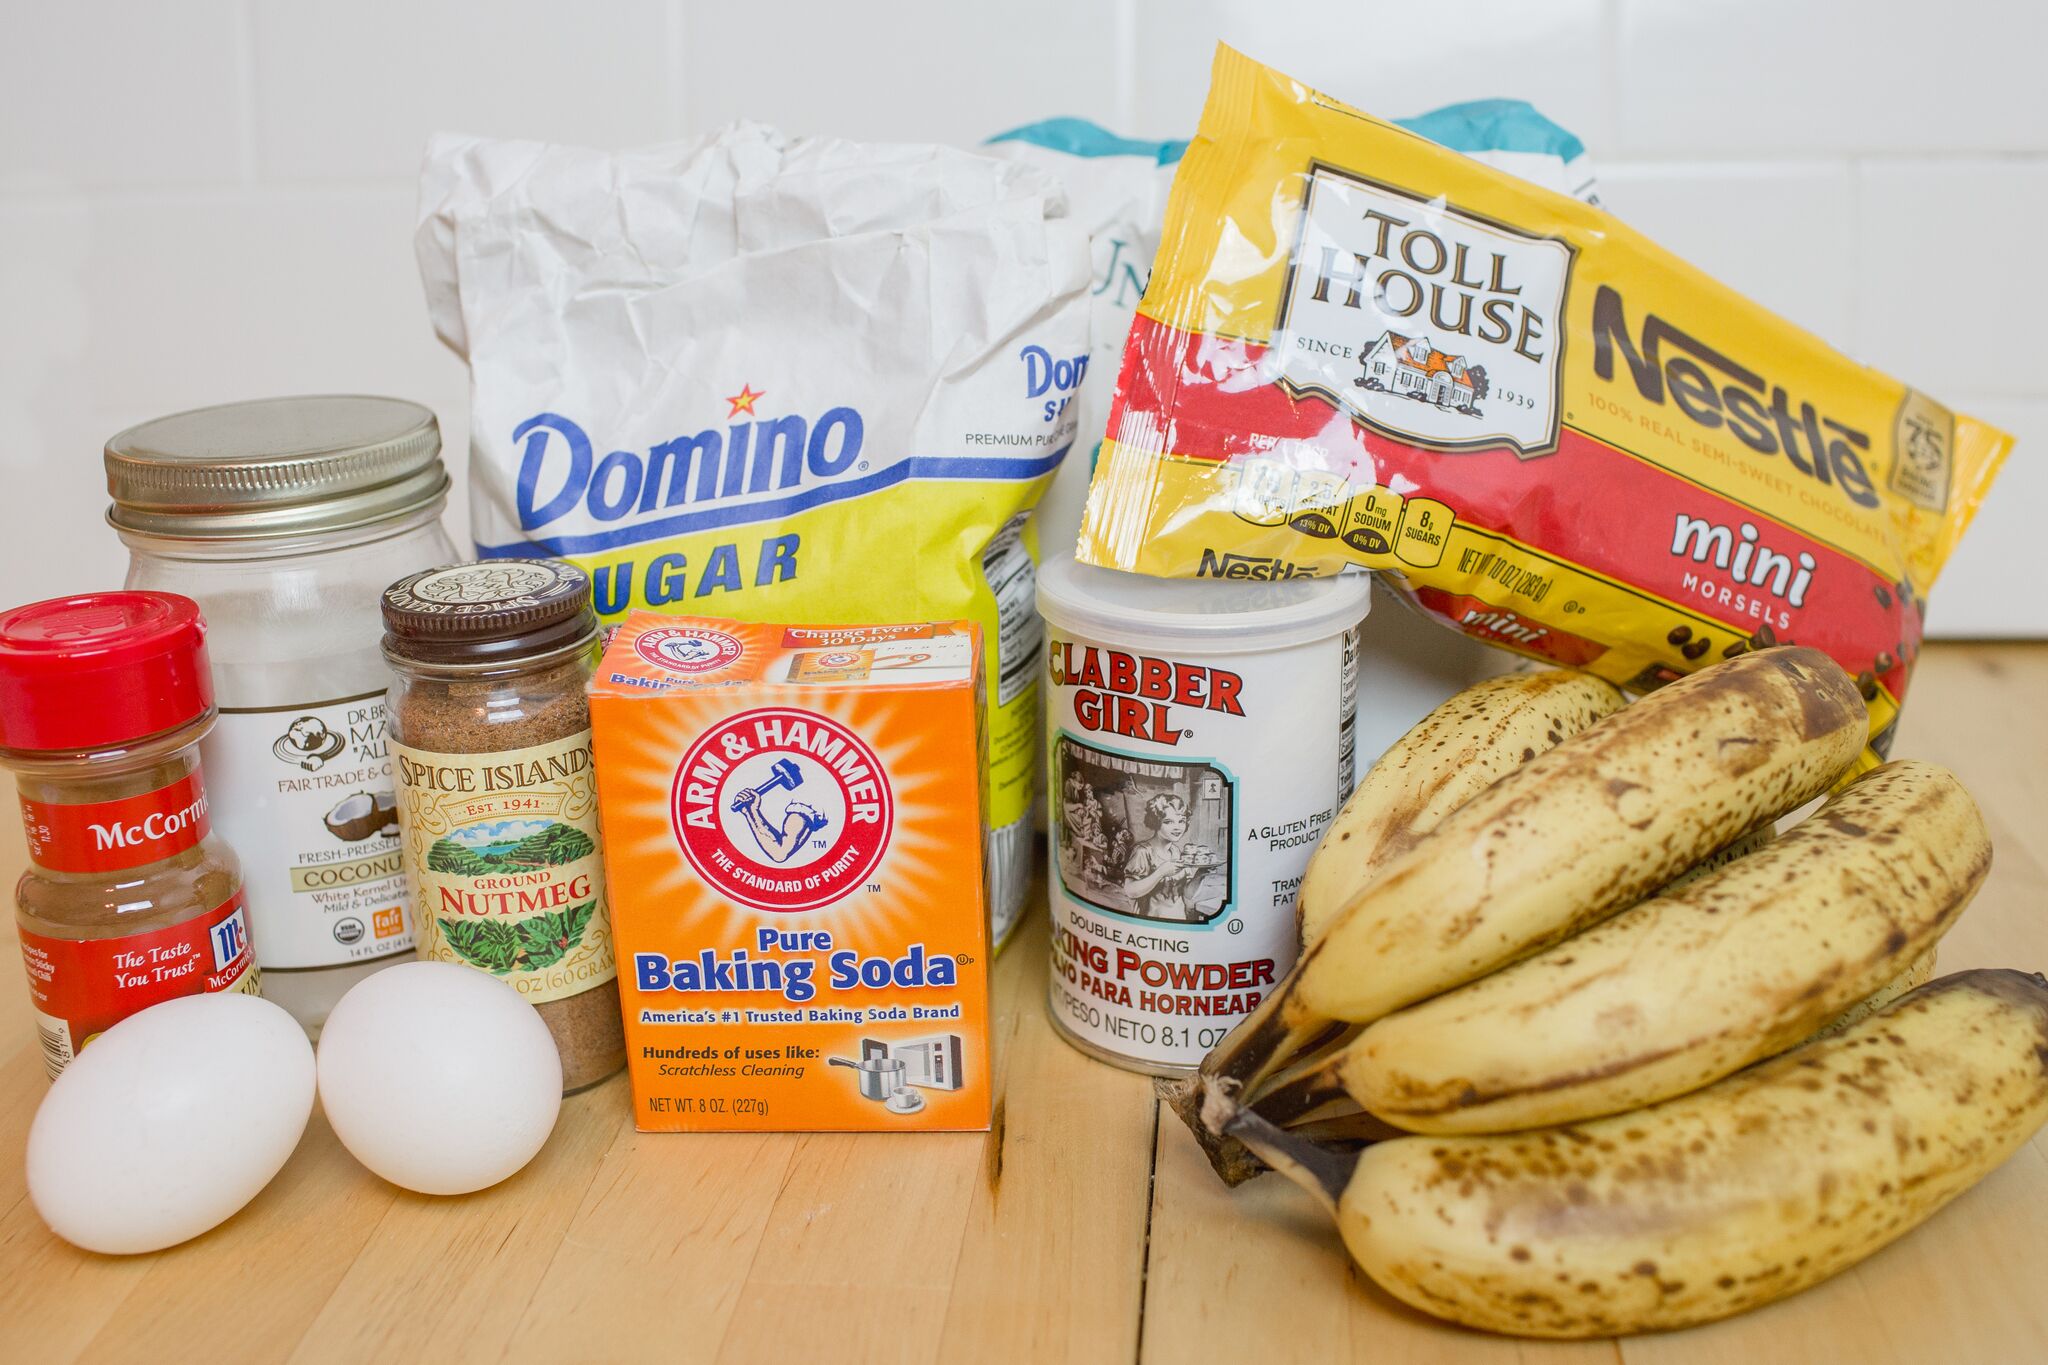 Assemble your ingredients for the chocolate chip banana bread: Cinnamon, eggs, coconut oil, nutmeg, baking soda, baking powder, sugar, flour, ripe bananas and mini chocolate morsels.